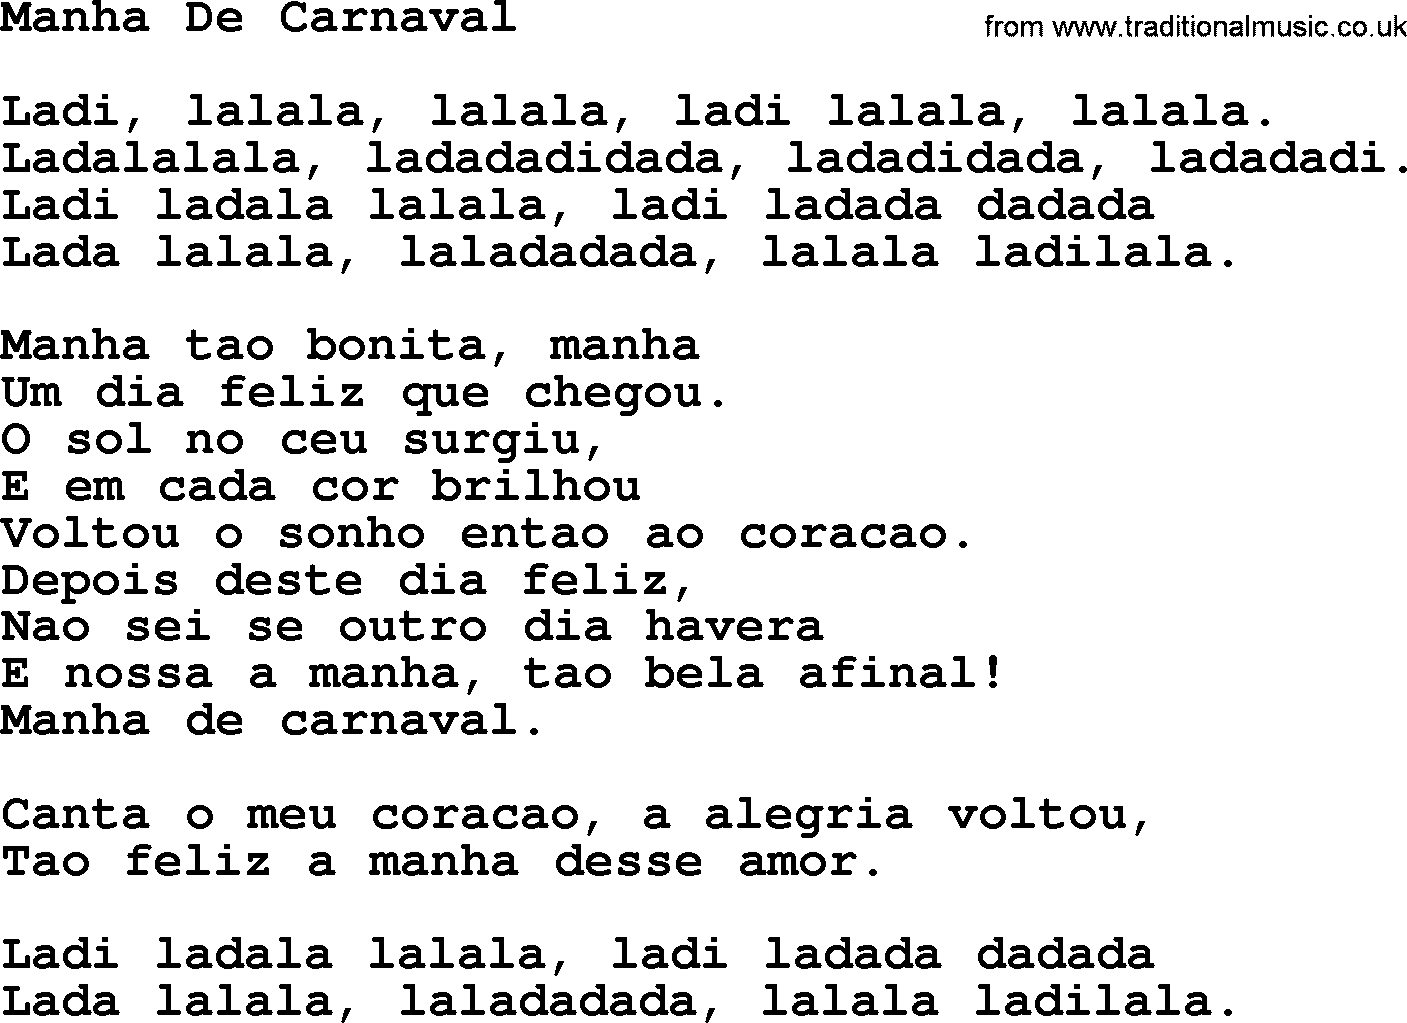 Joan Baez song Manha De Carnaval, lyrics